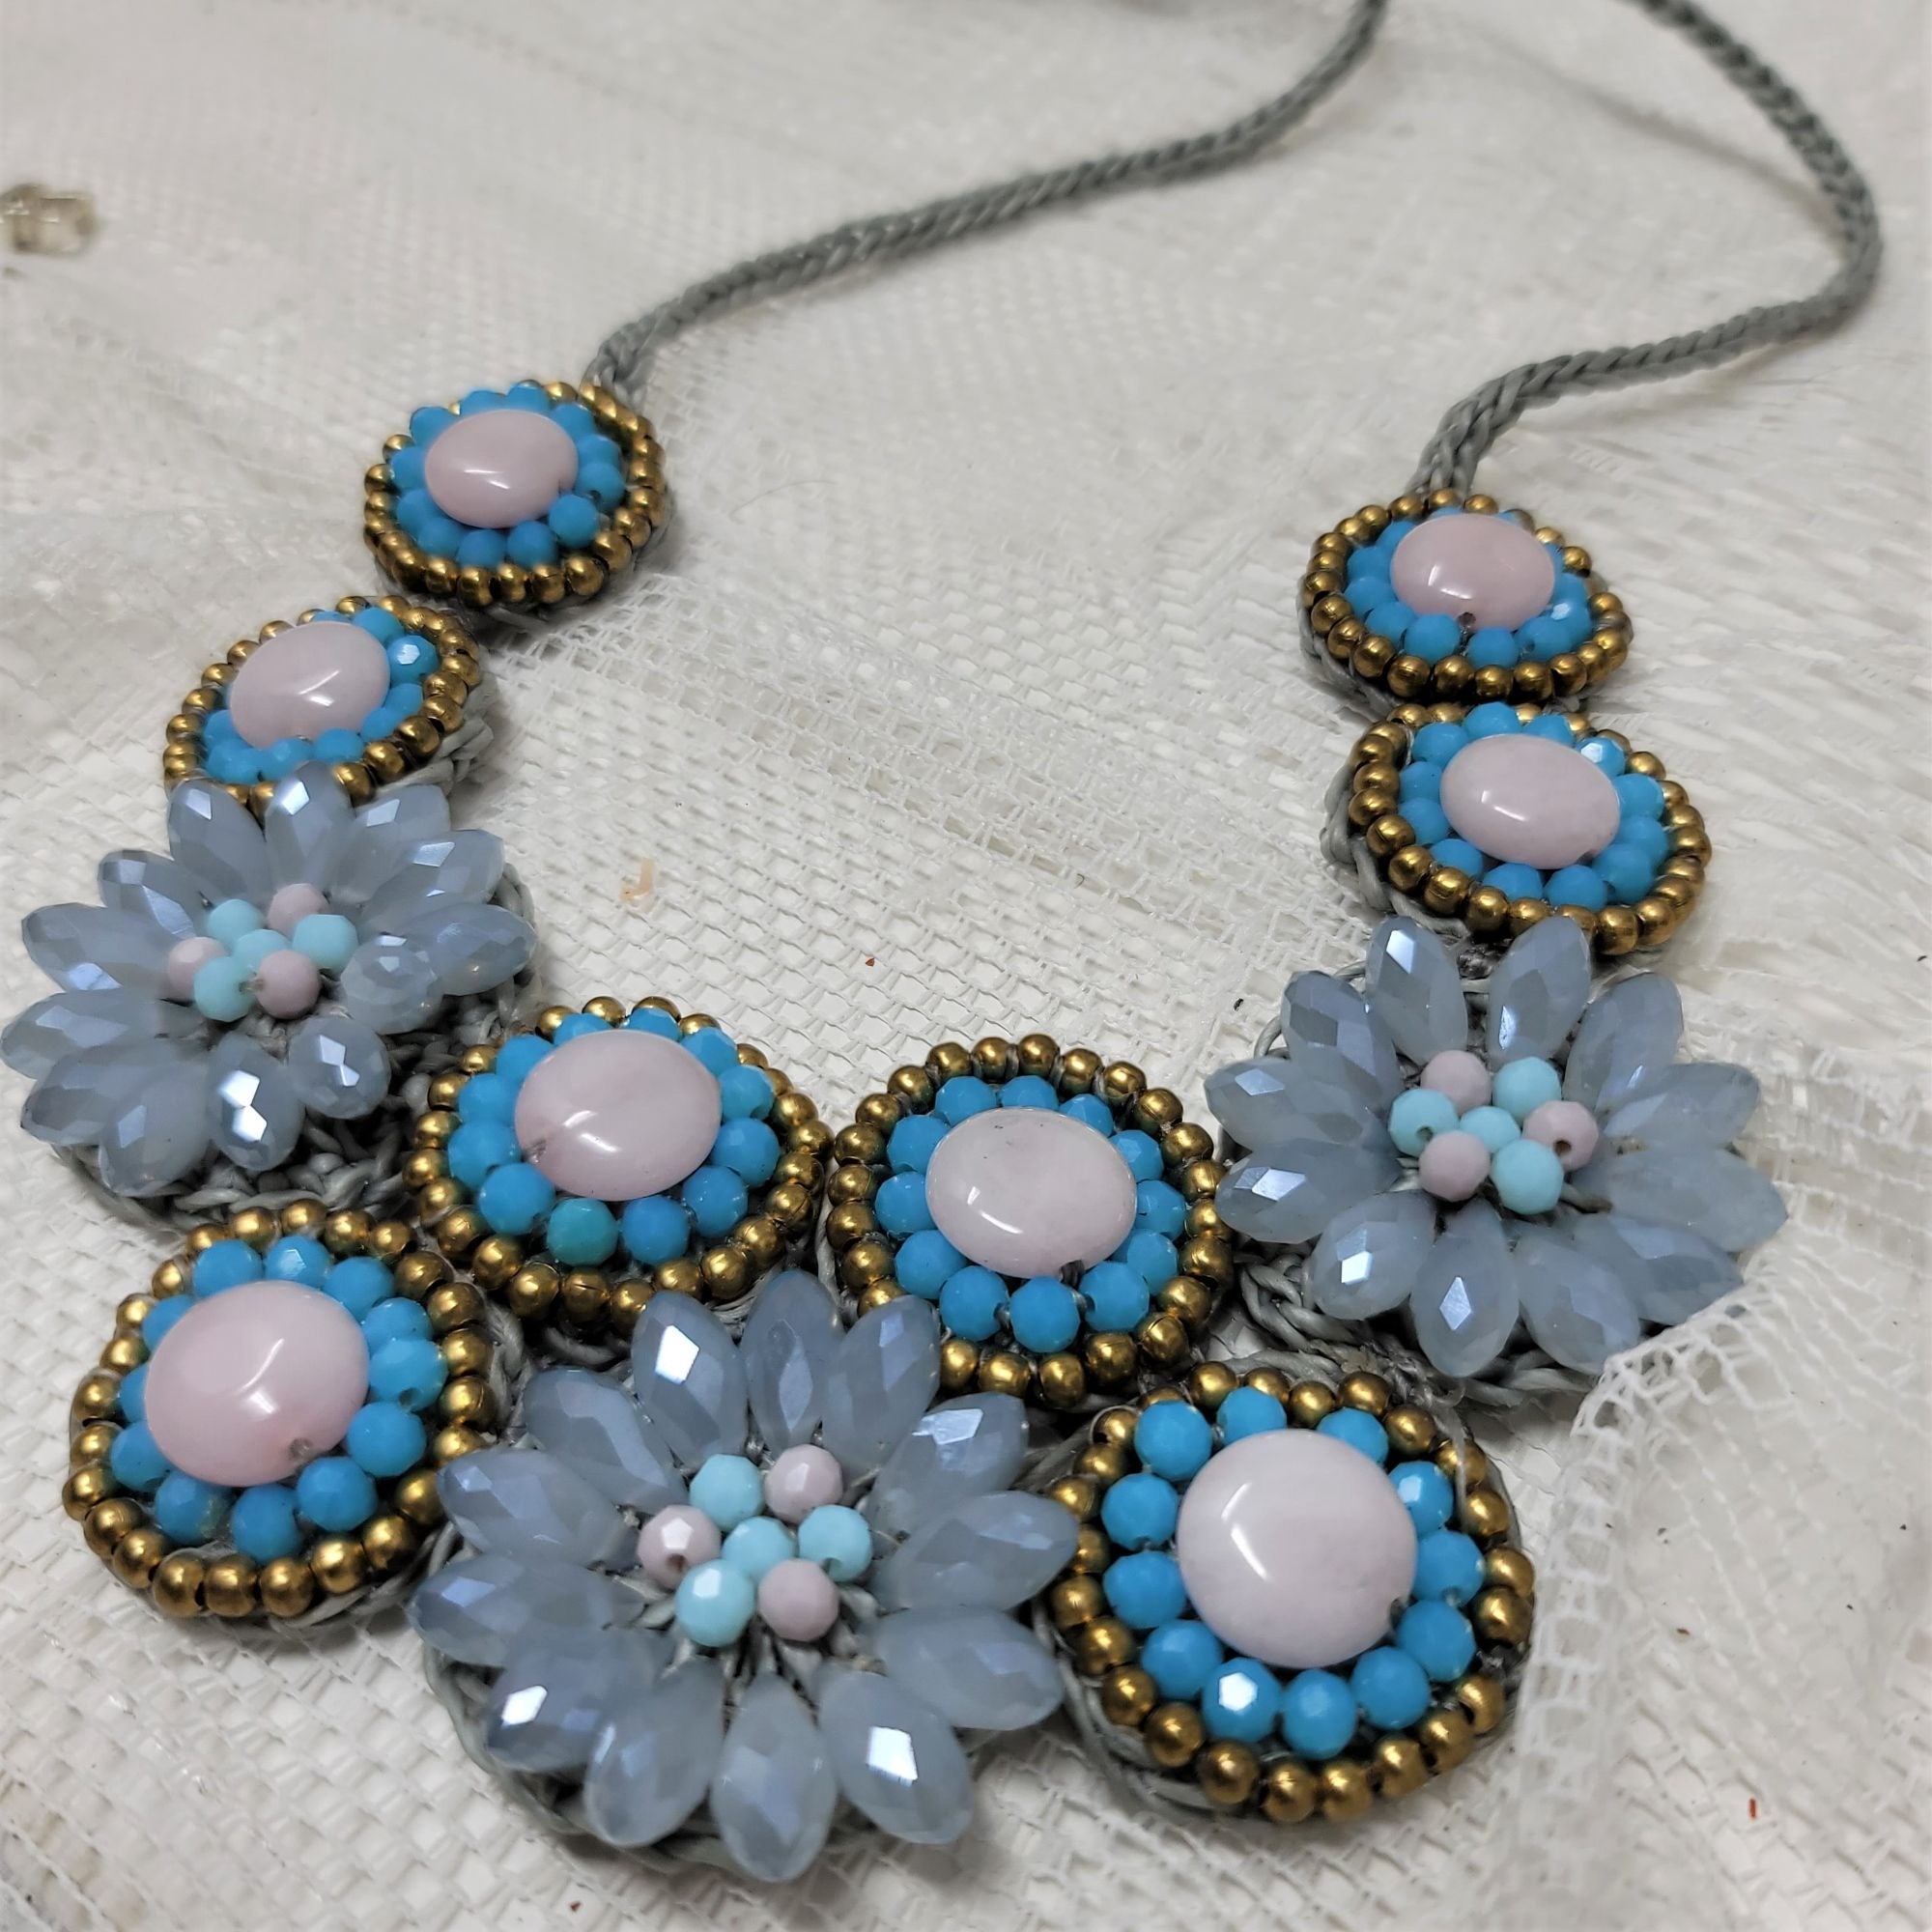 Sparkling Blue Gray Bib Necklace